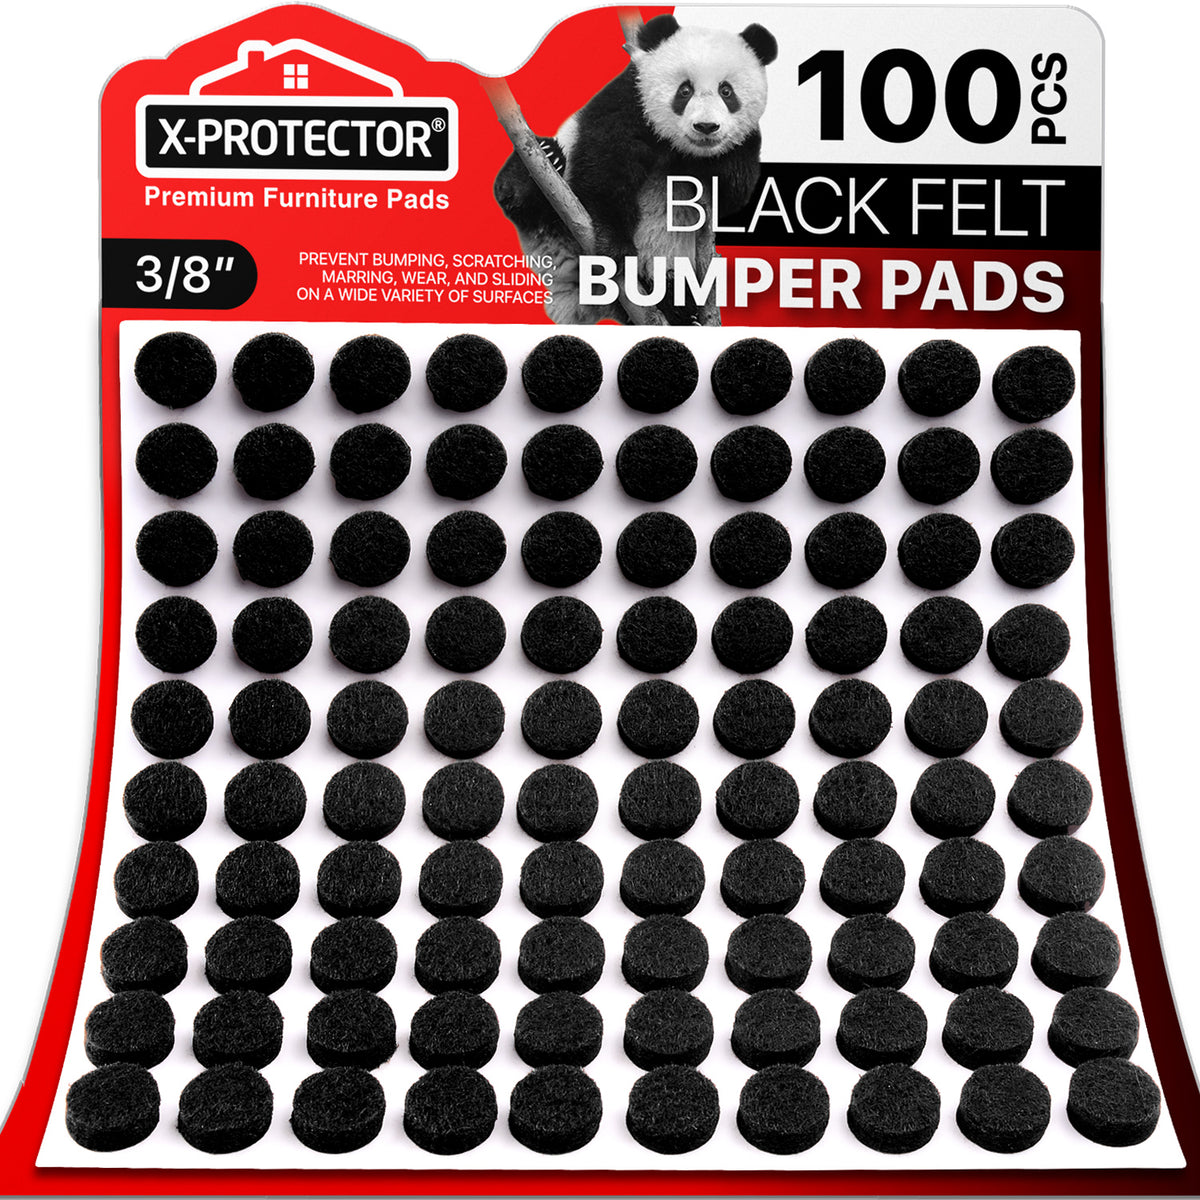 X-Protector Self-Adhesive Small Black Cabinet Door Bumpers 100pcs 3/8”